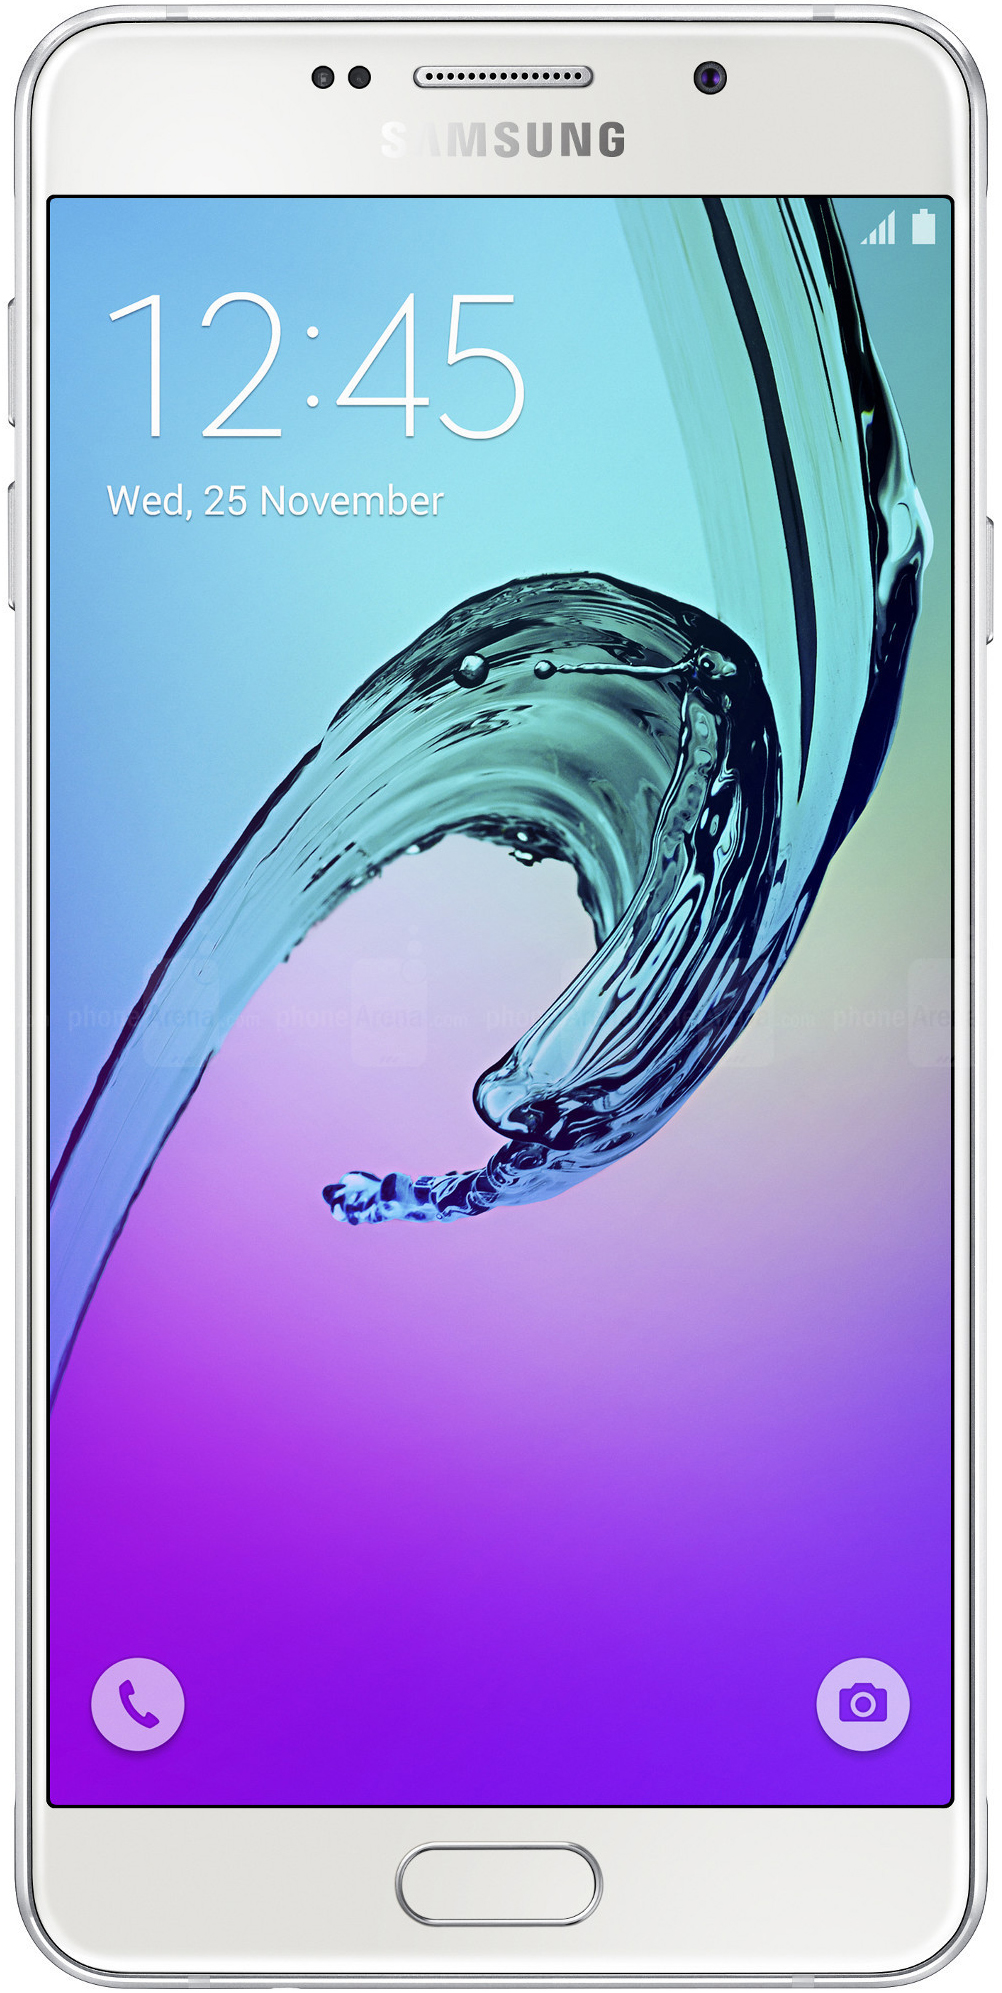 Samsung Galaxy A7 2016, Berevolusi di Hardware